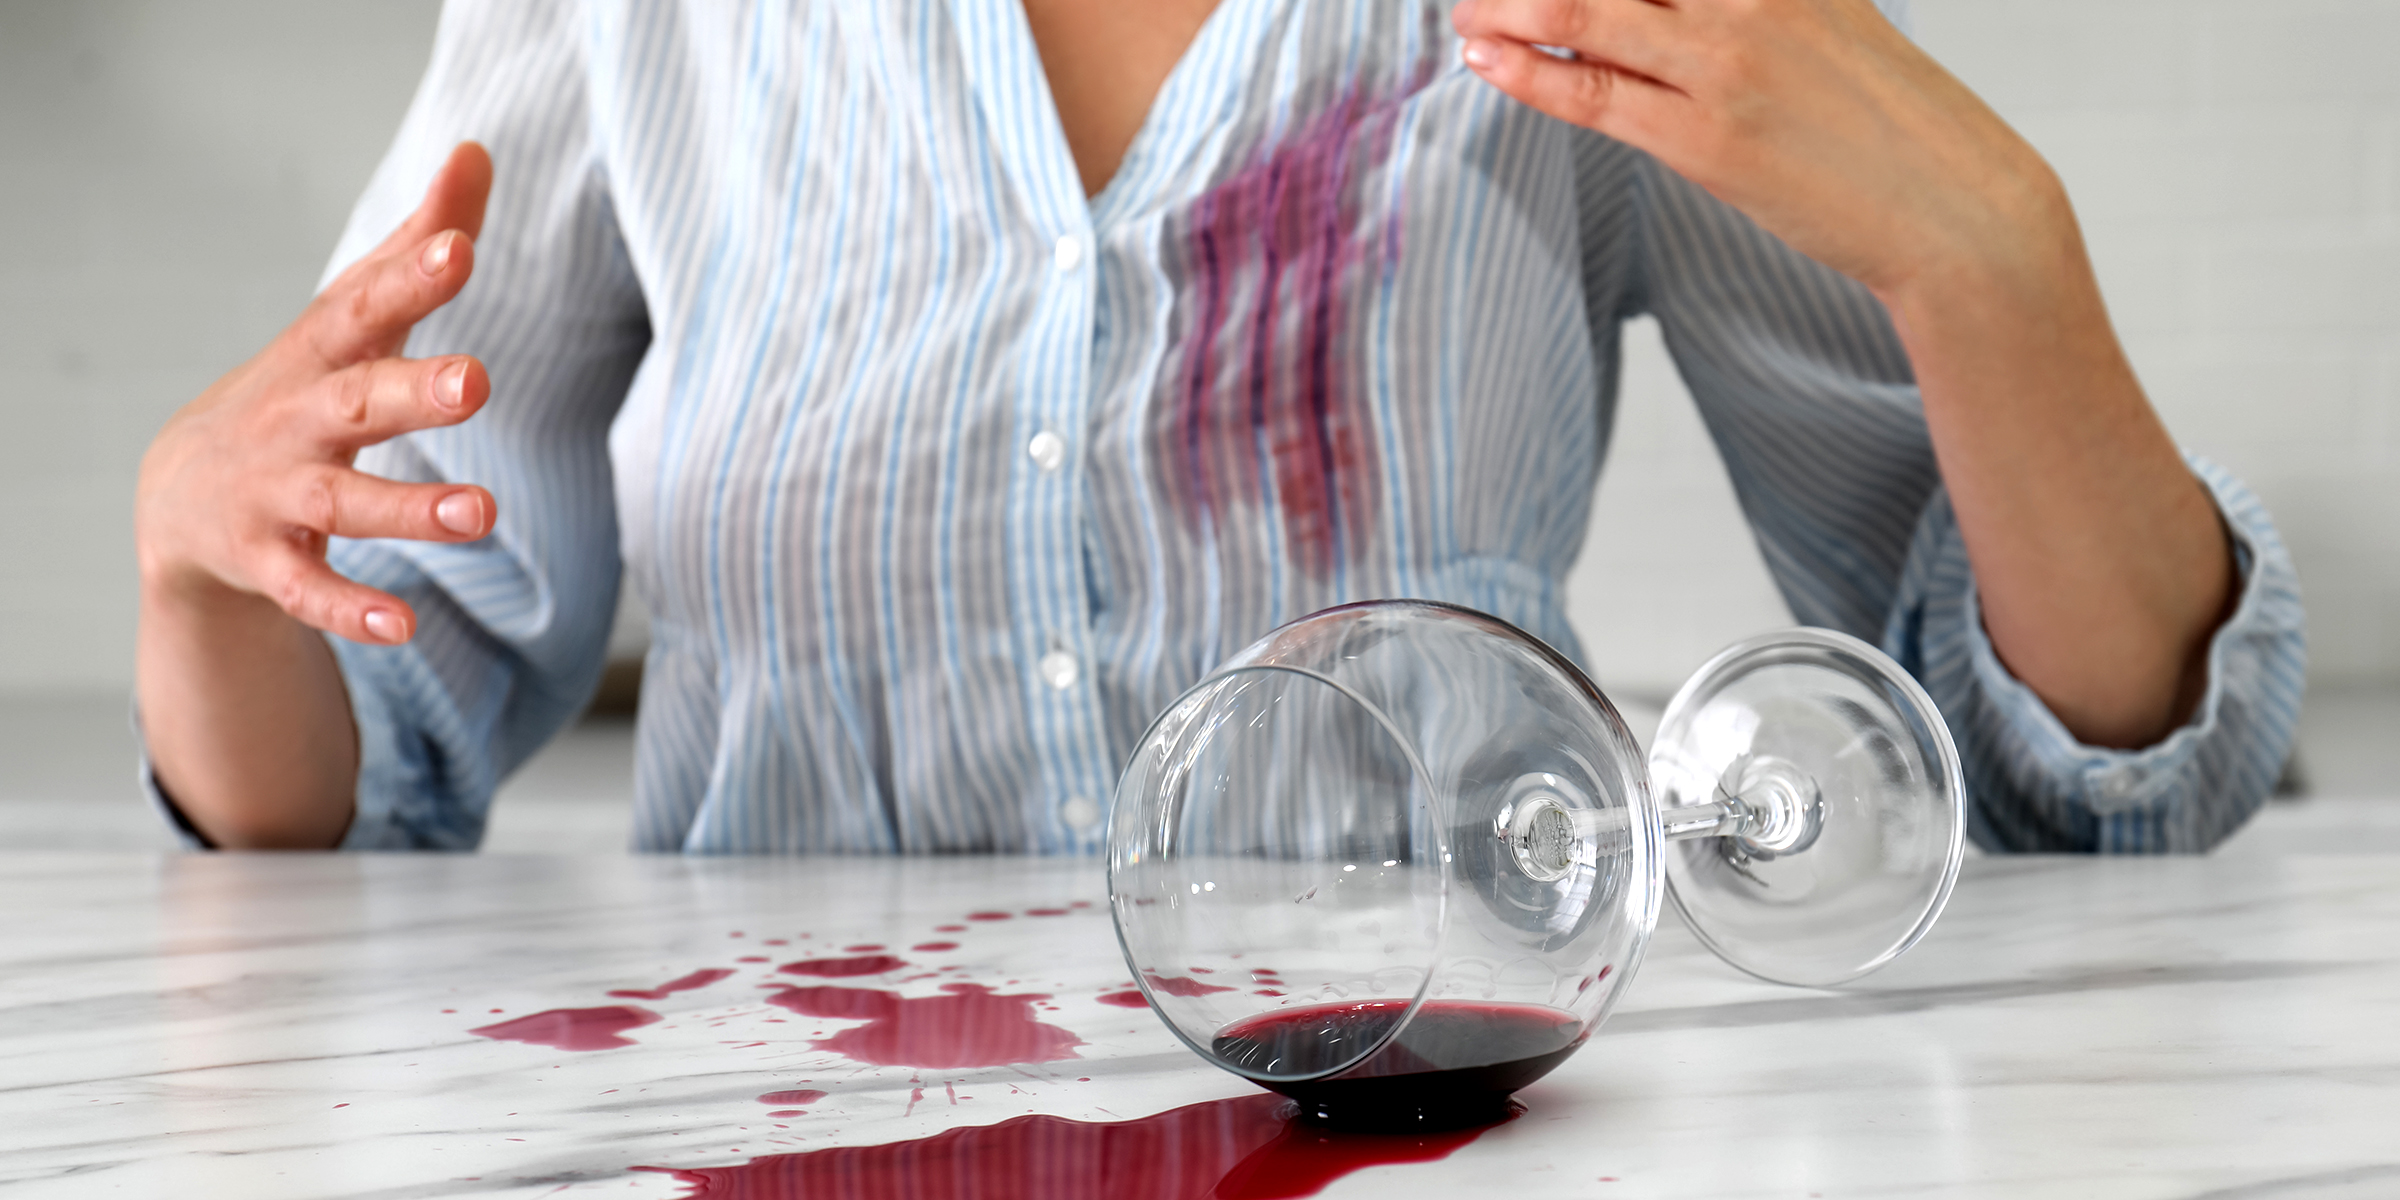 Copa de vino derramada | Foto: Shutterstock